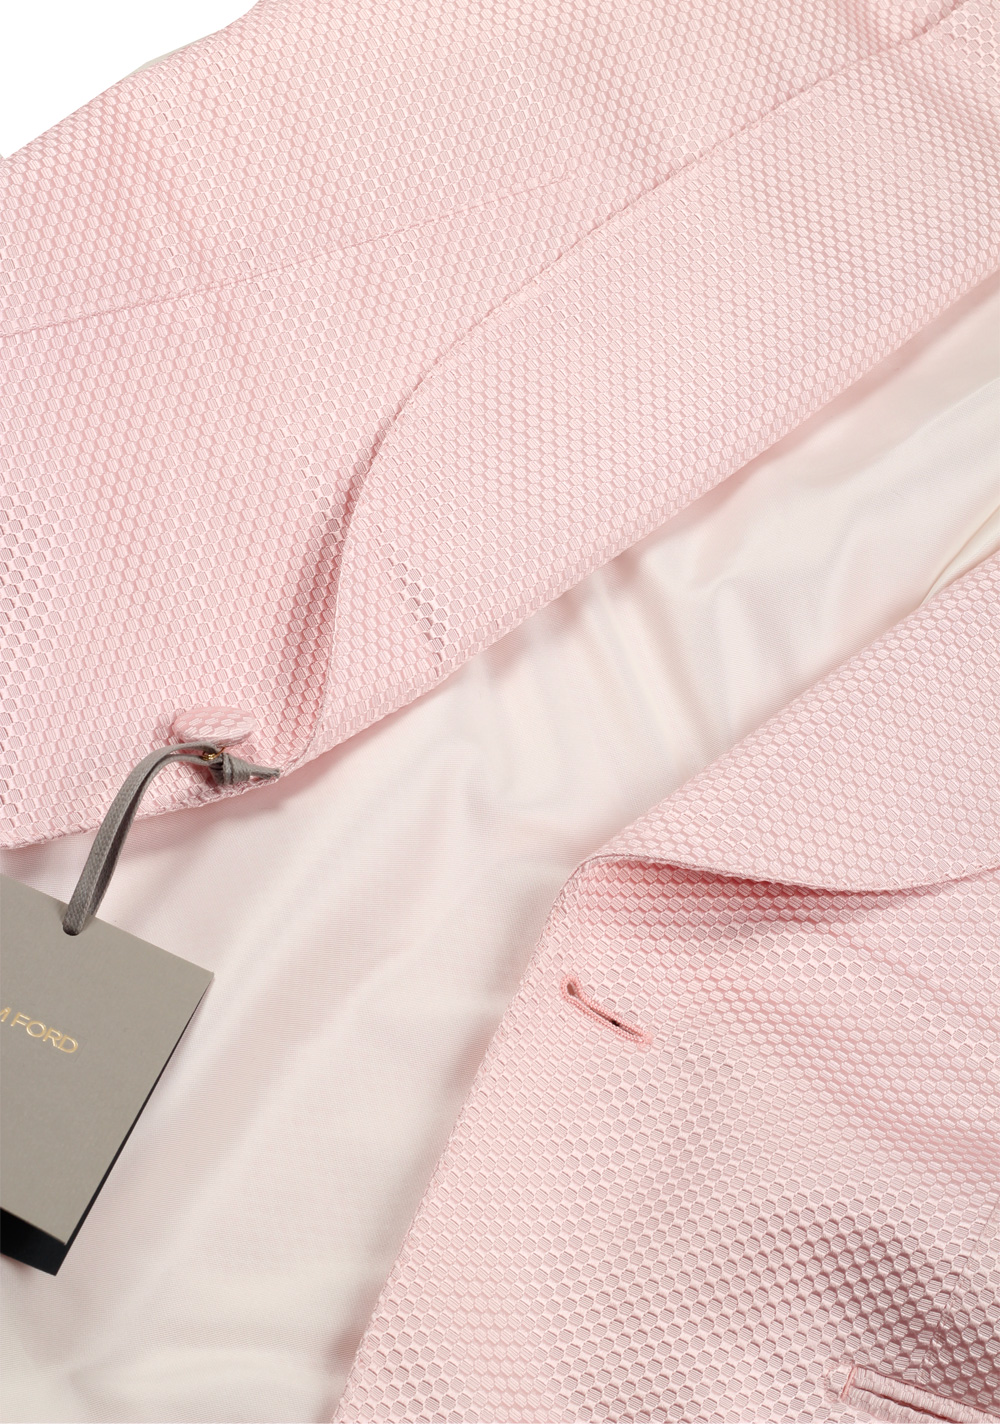 TOM FORD Shelton Pink Shawl Collar Sport Coat Tuxedo Dinner Jacket Size 48 / 38R U.S. | Costume Limité